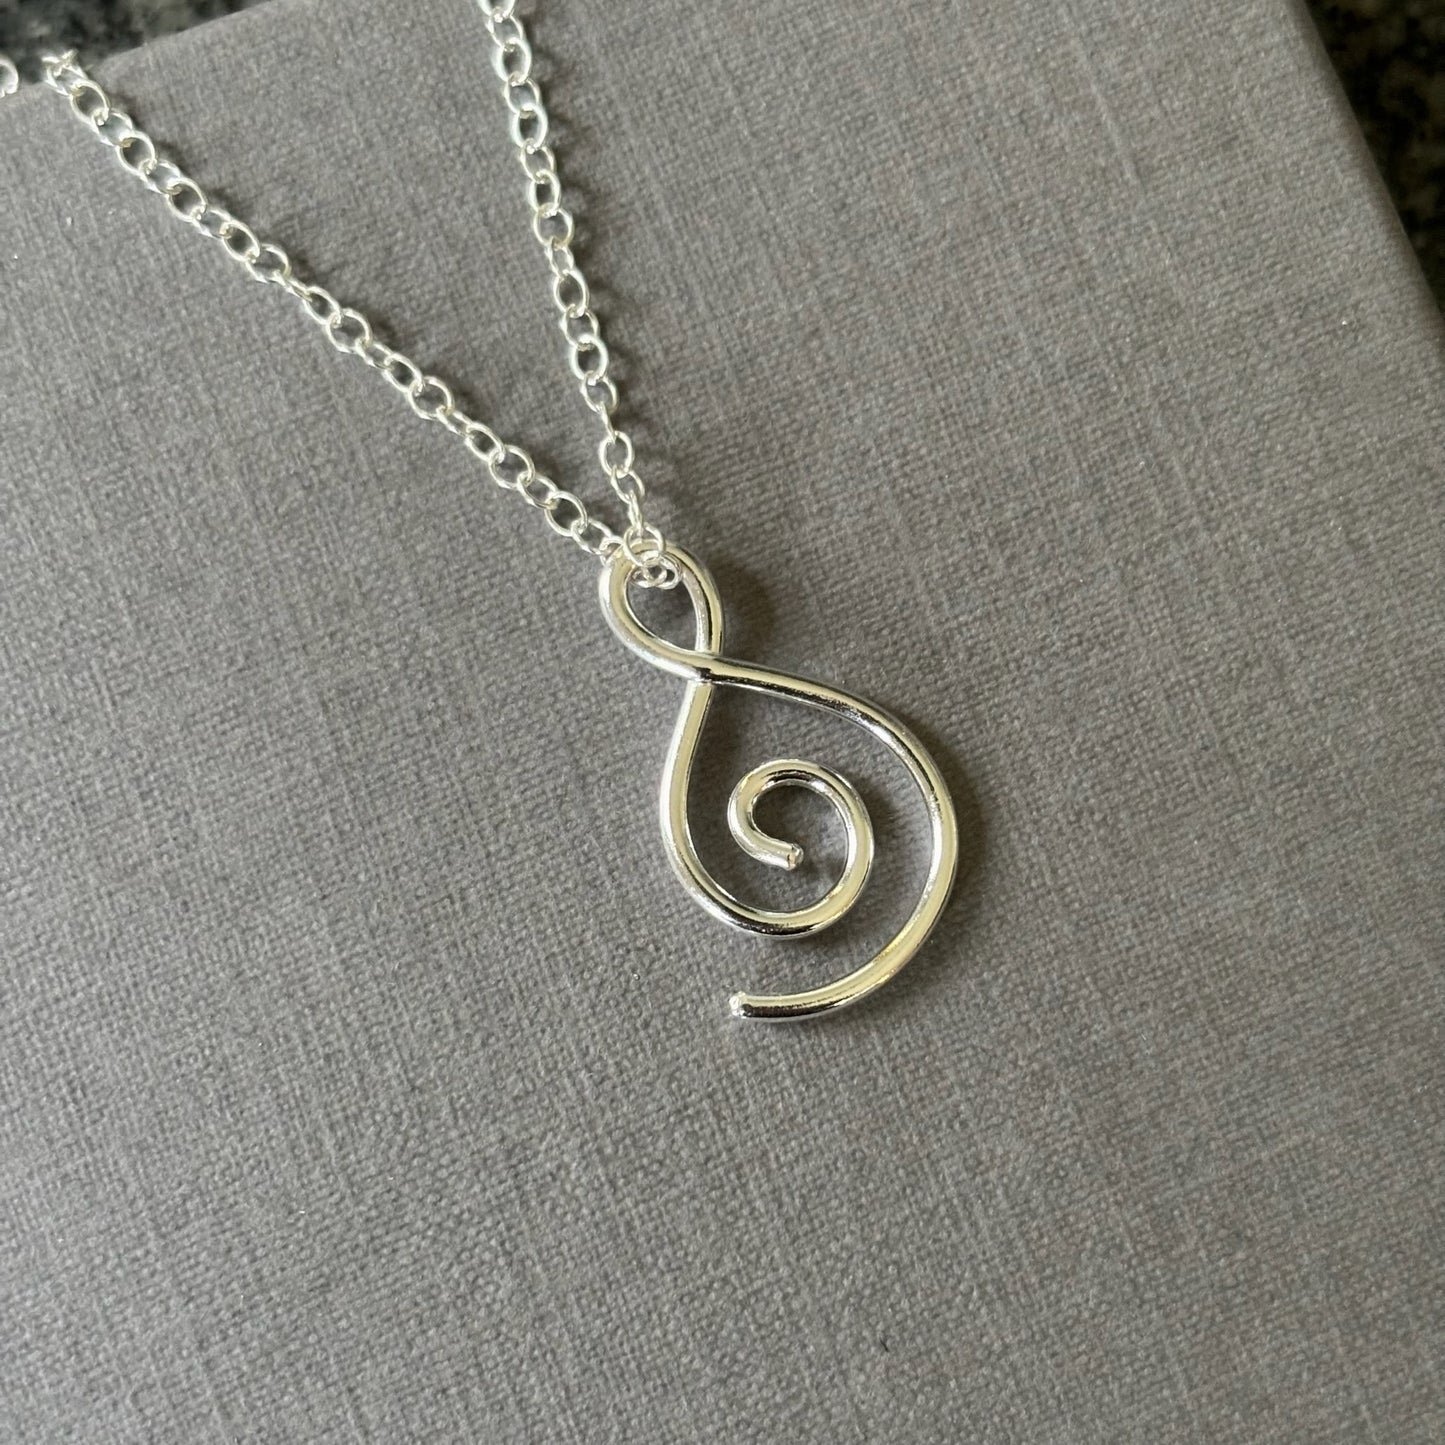 Spirit necklace, sterling silver spiral necklace